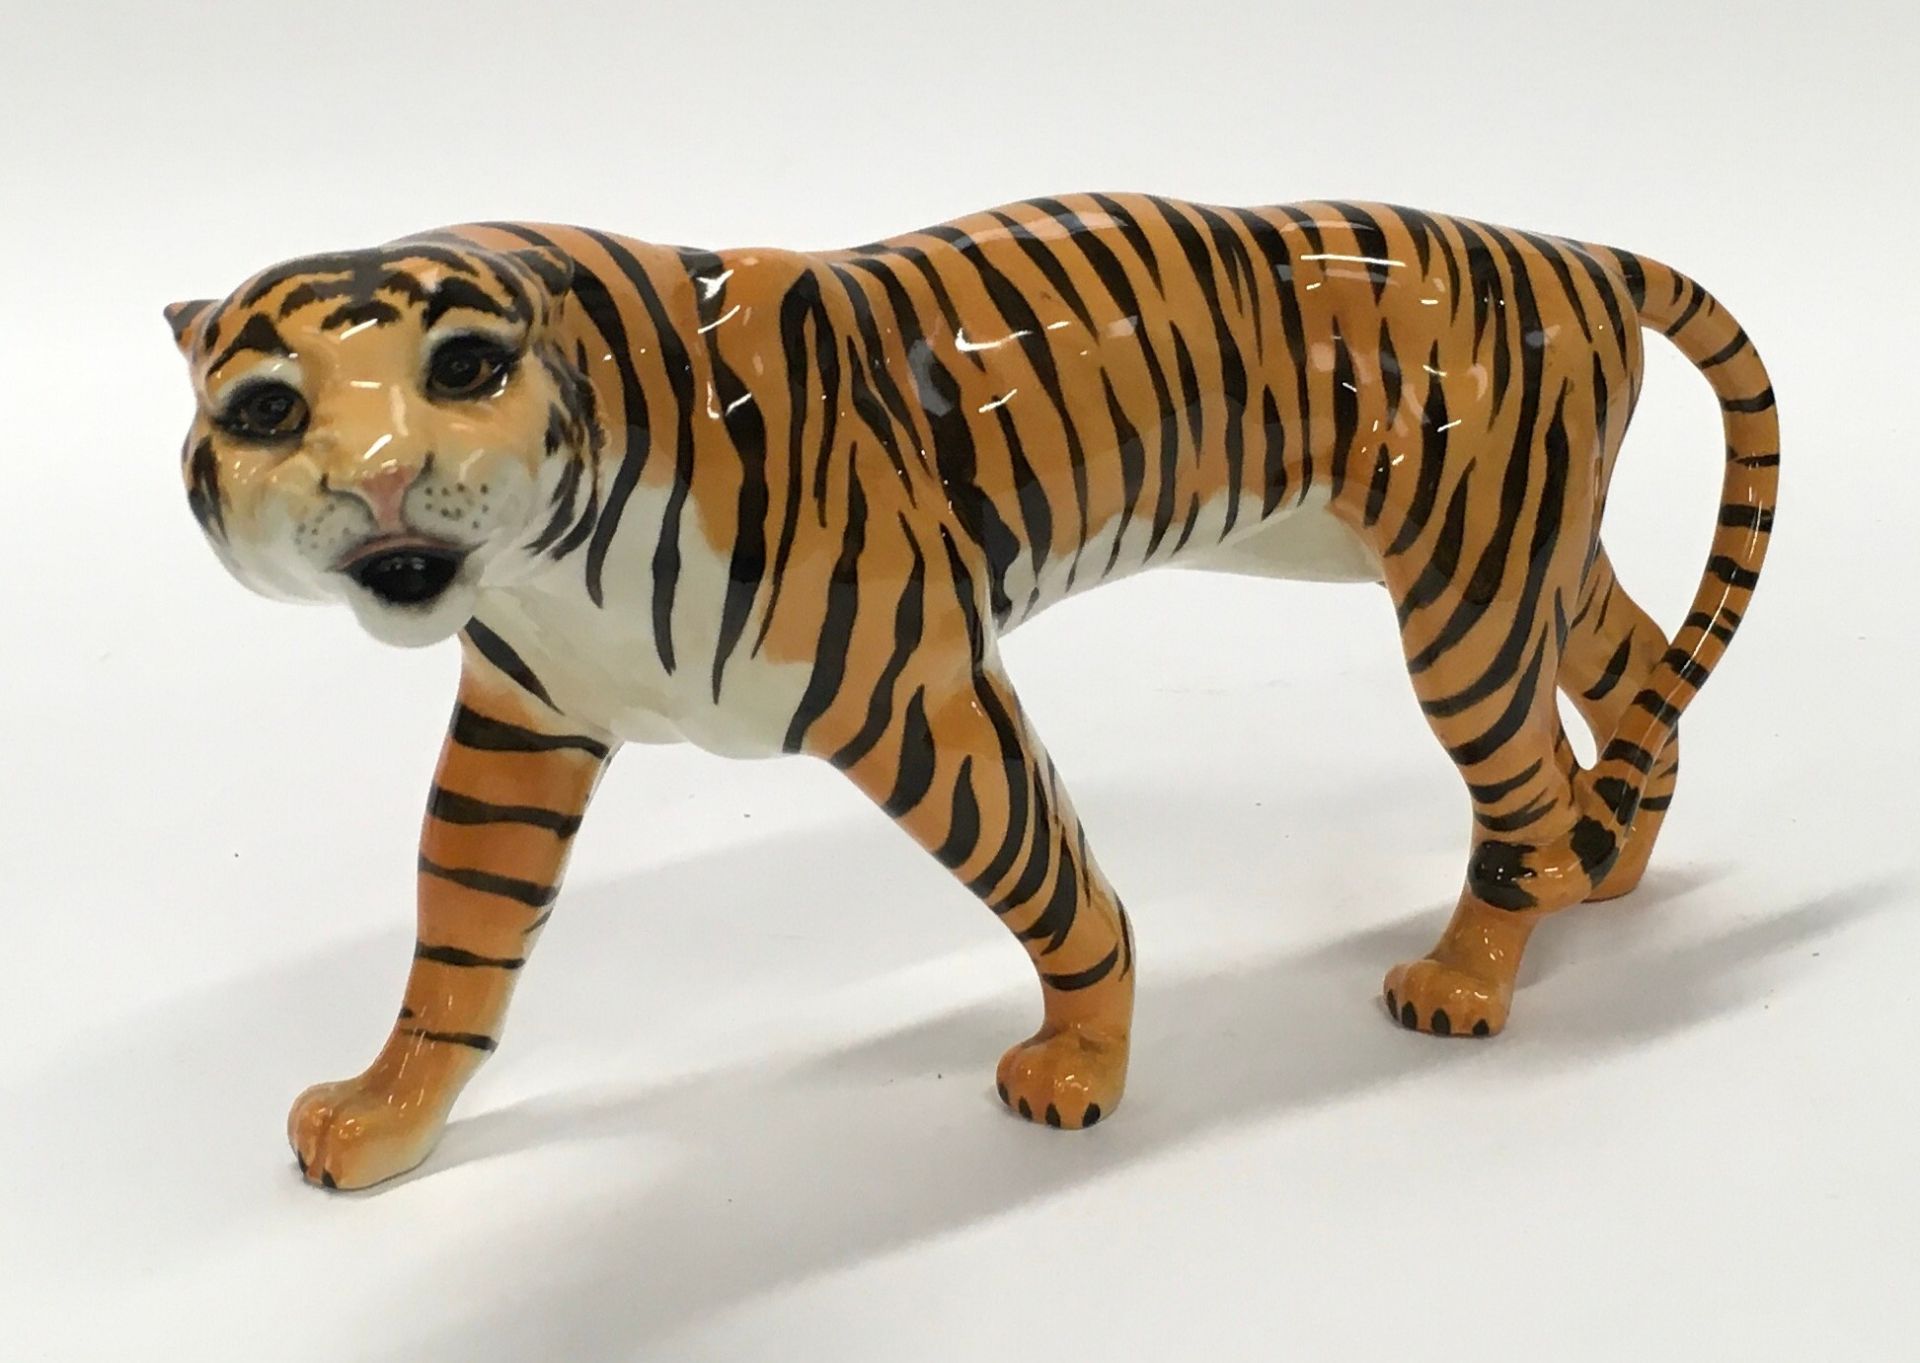 Beswick tigress ornament with markings 23cm long.